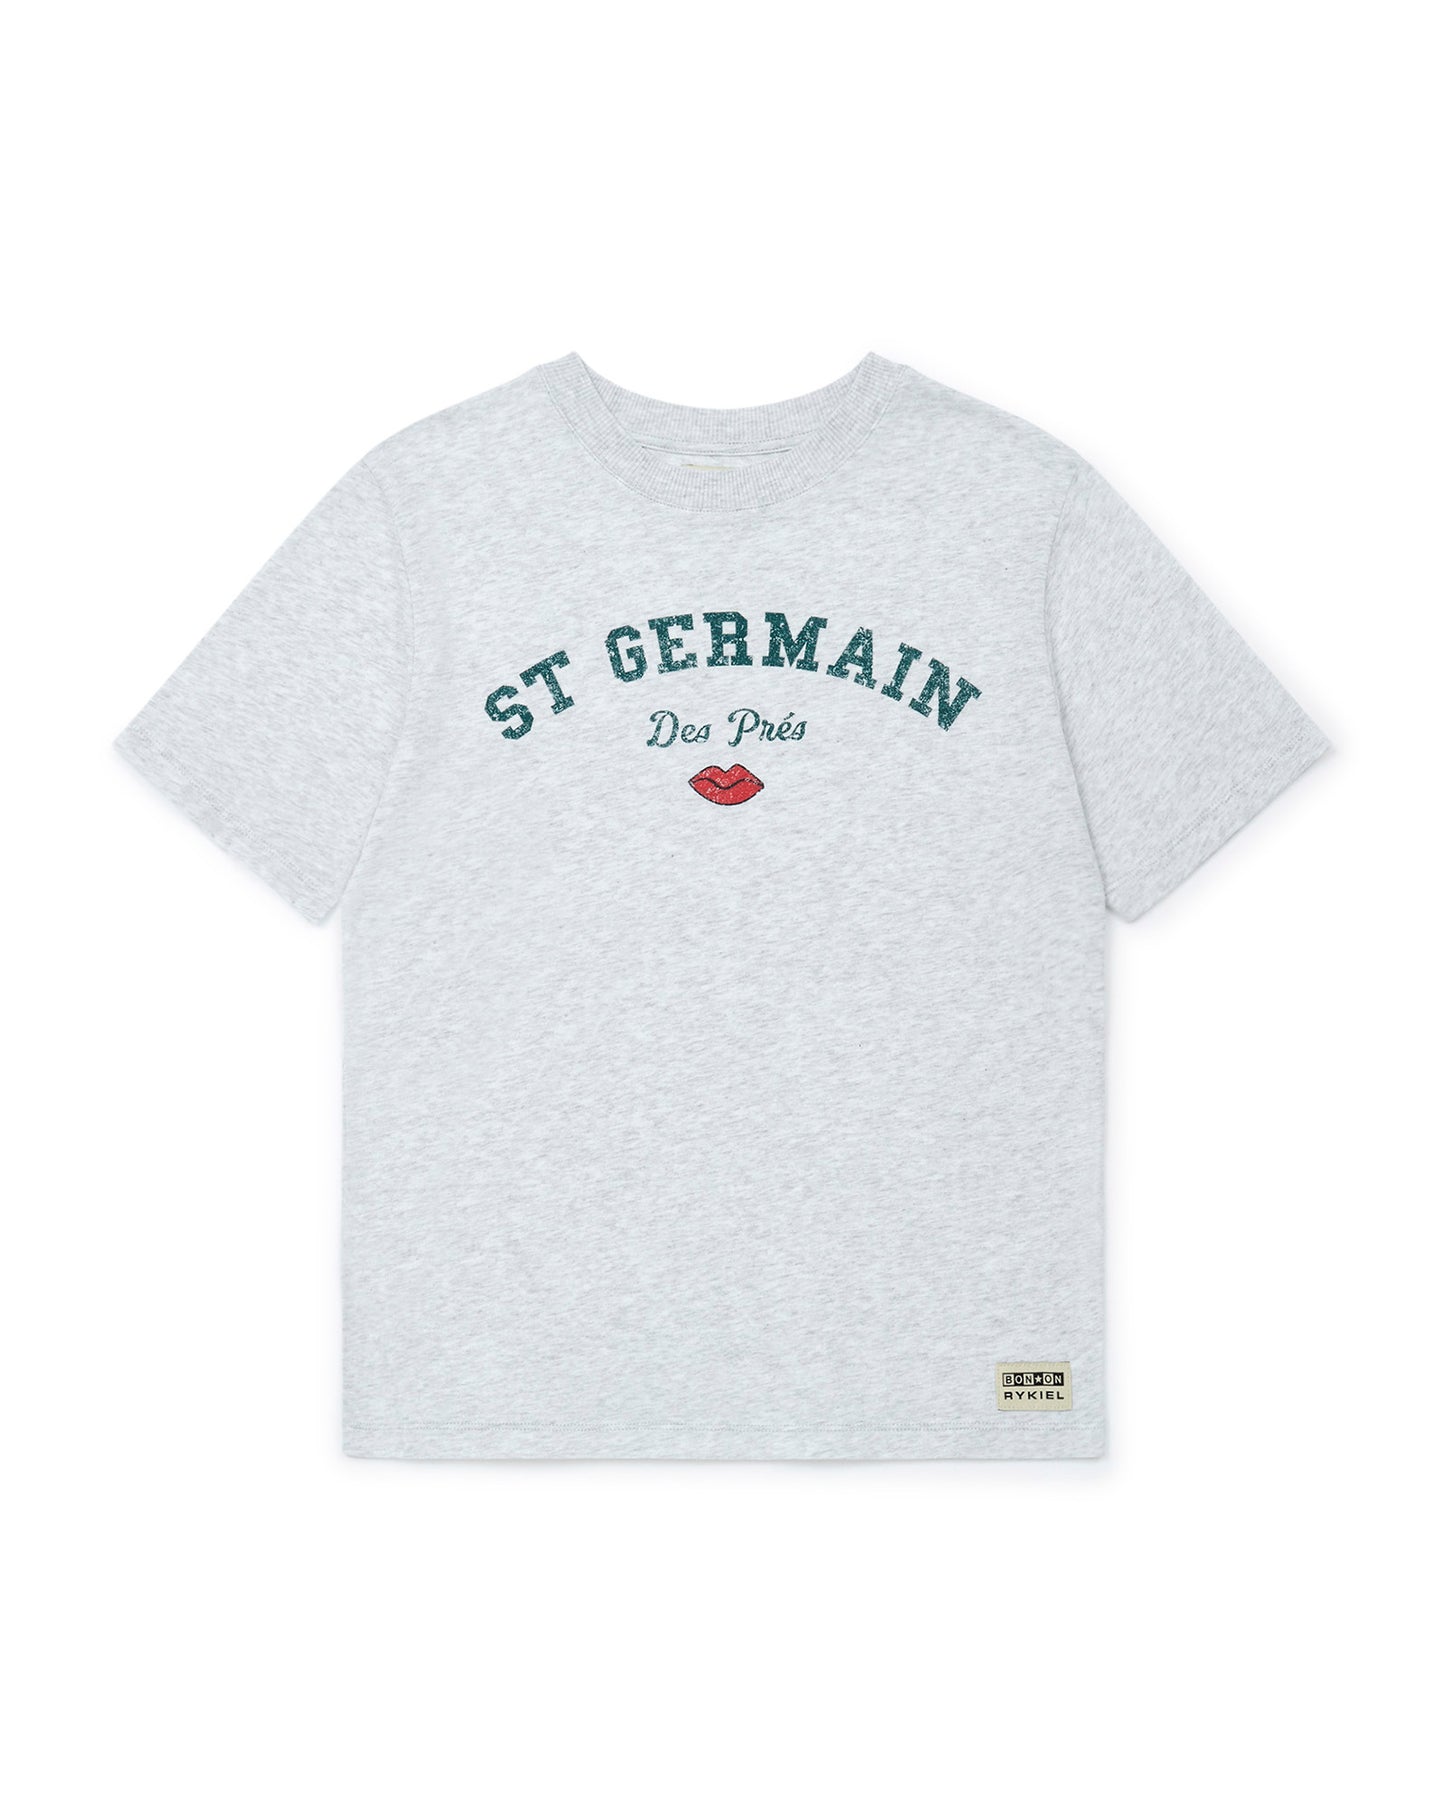 T-shirt - Saint Germain des Prés BONTON x Sonia Rykiel